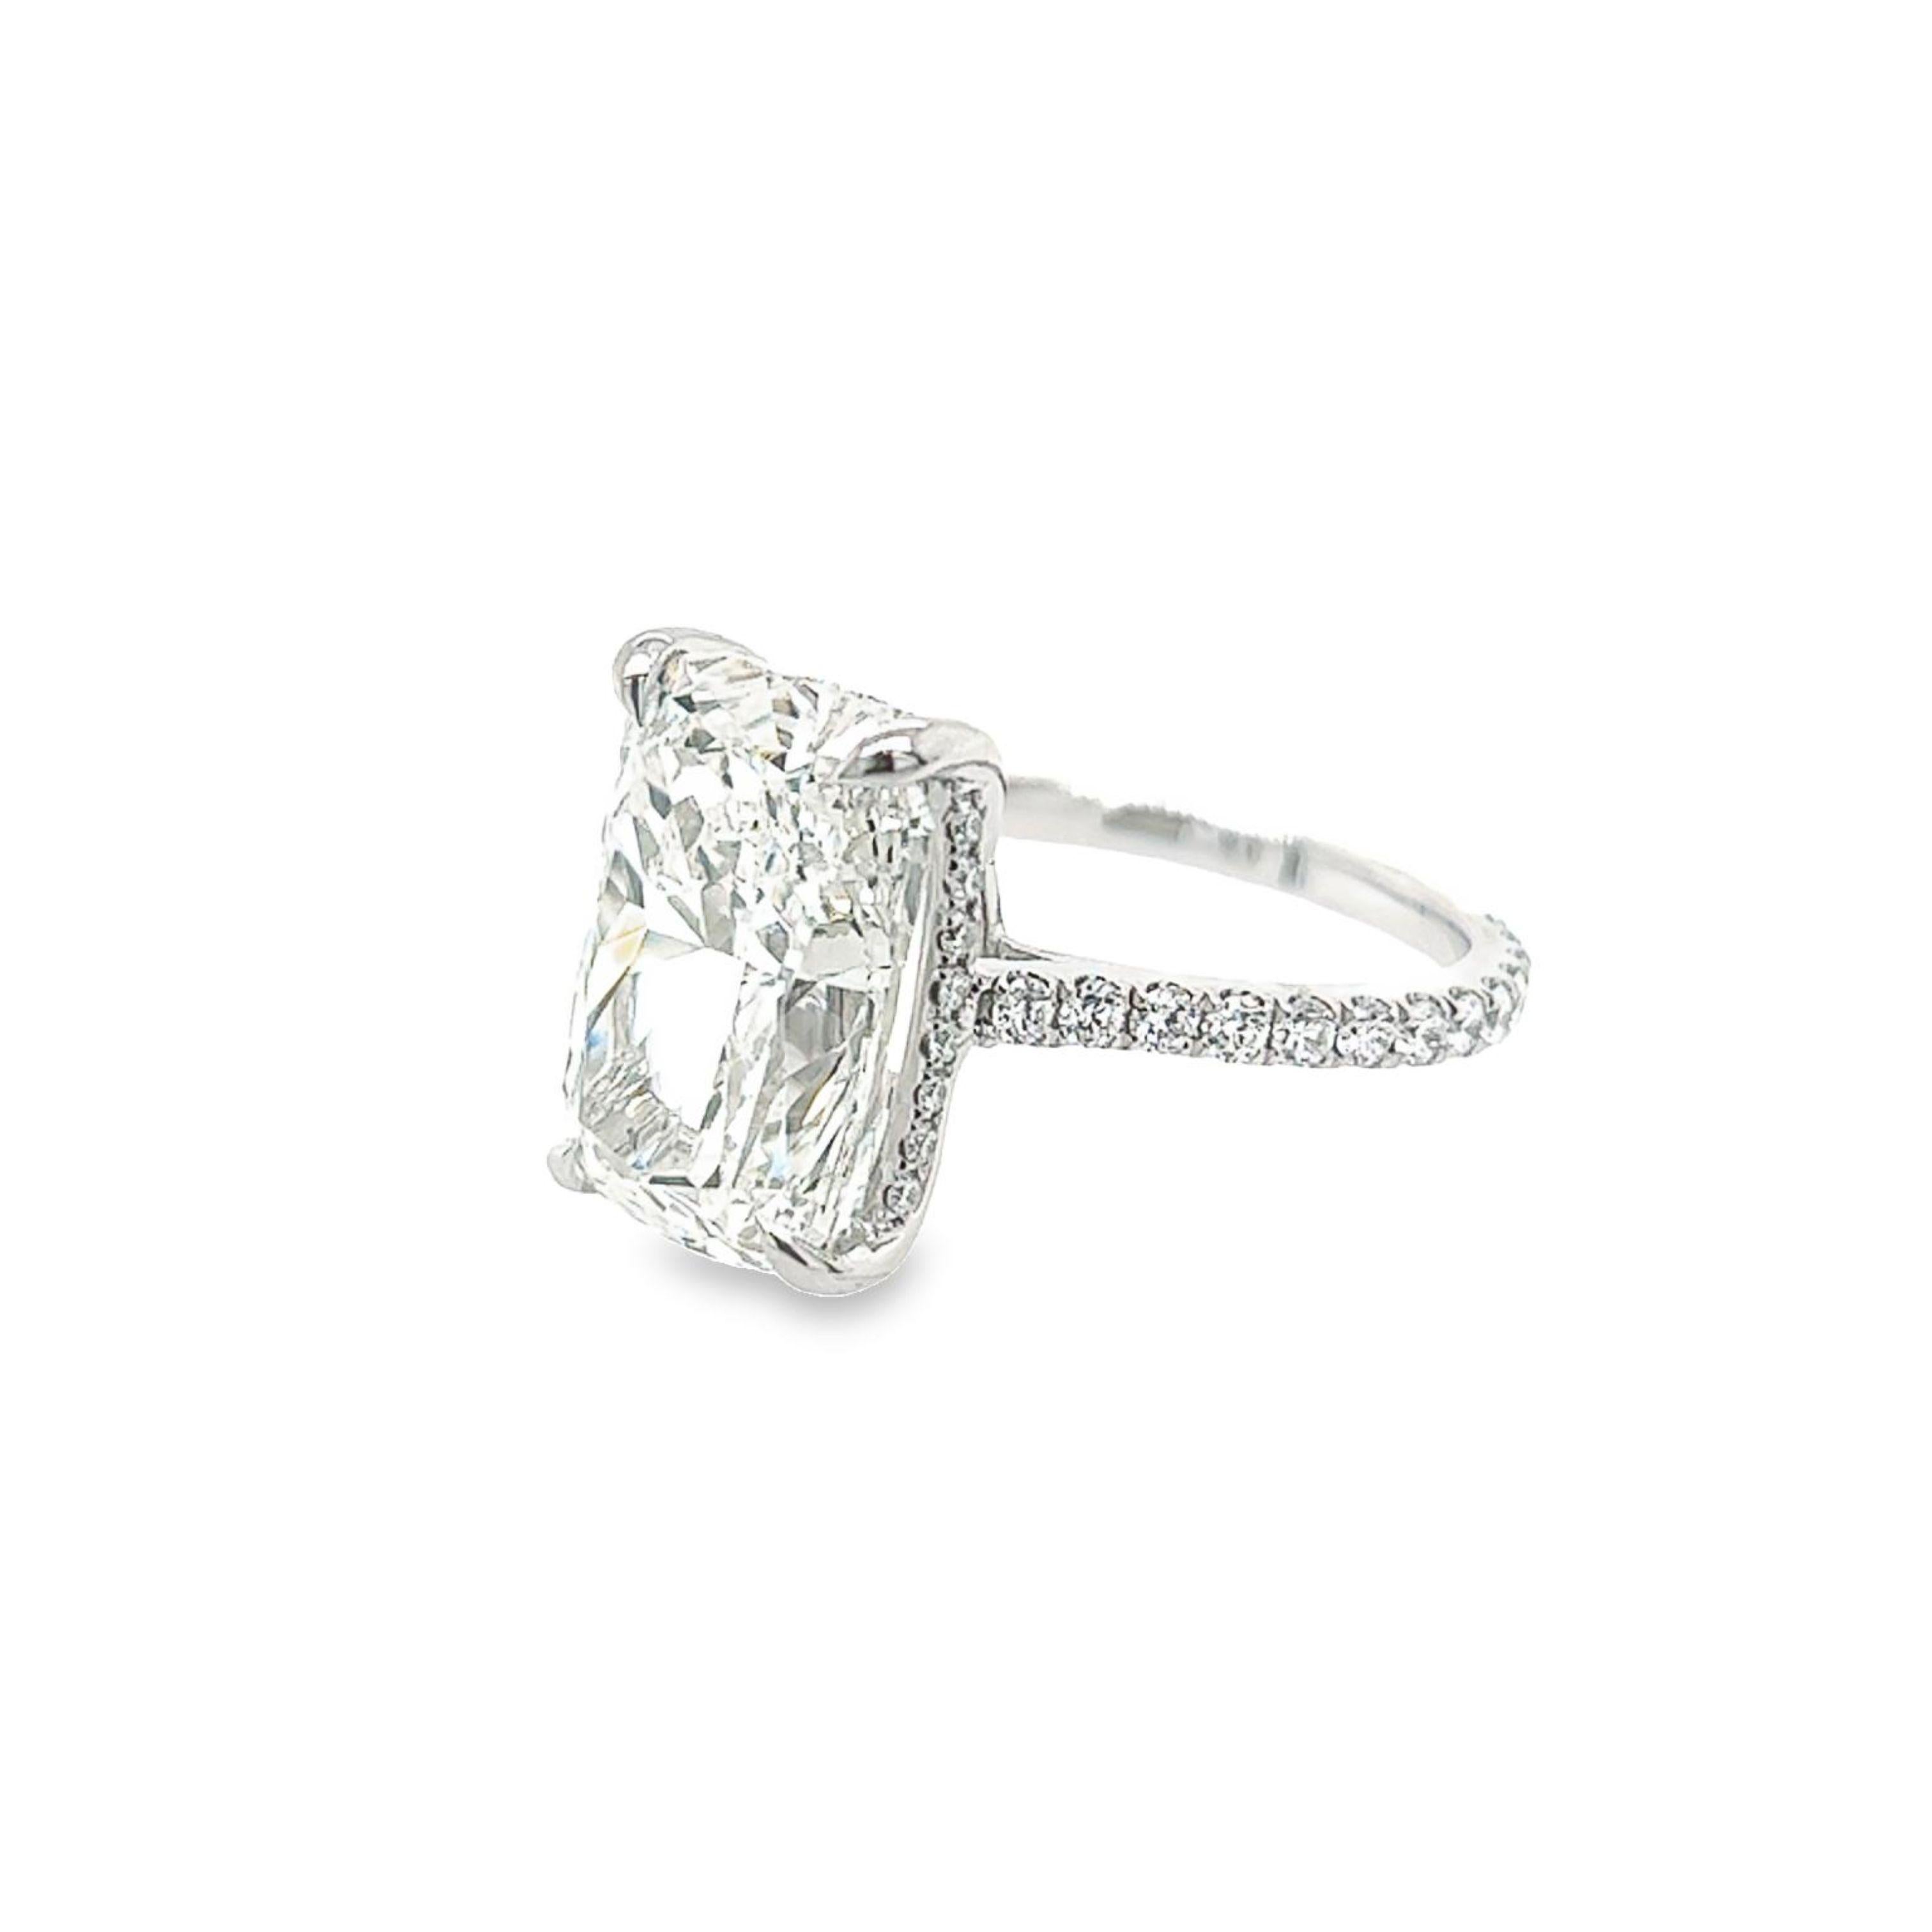 8 carat cushion cut diamond ring